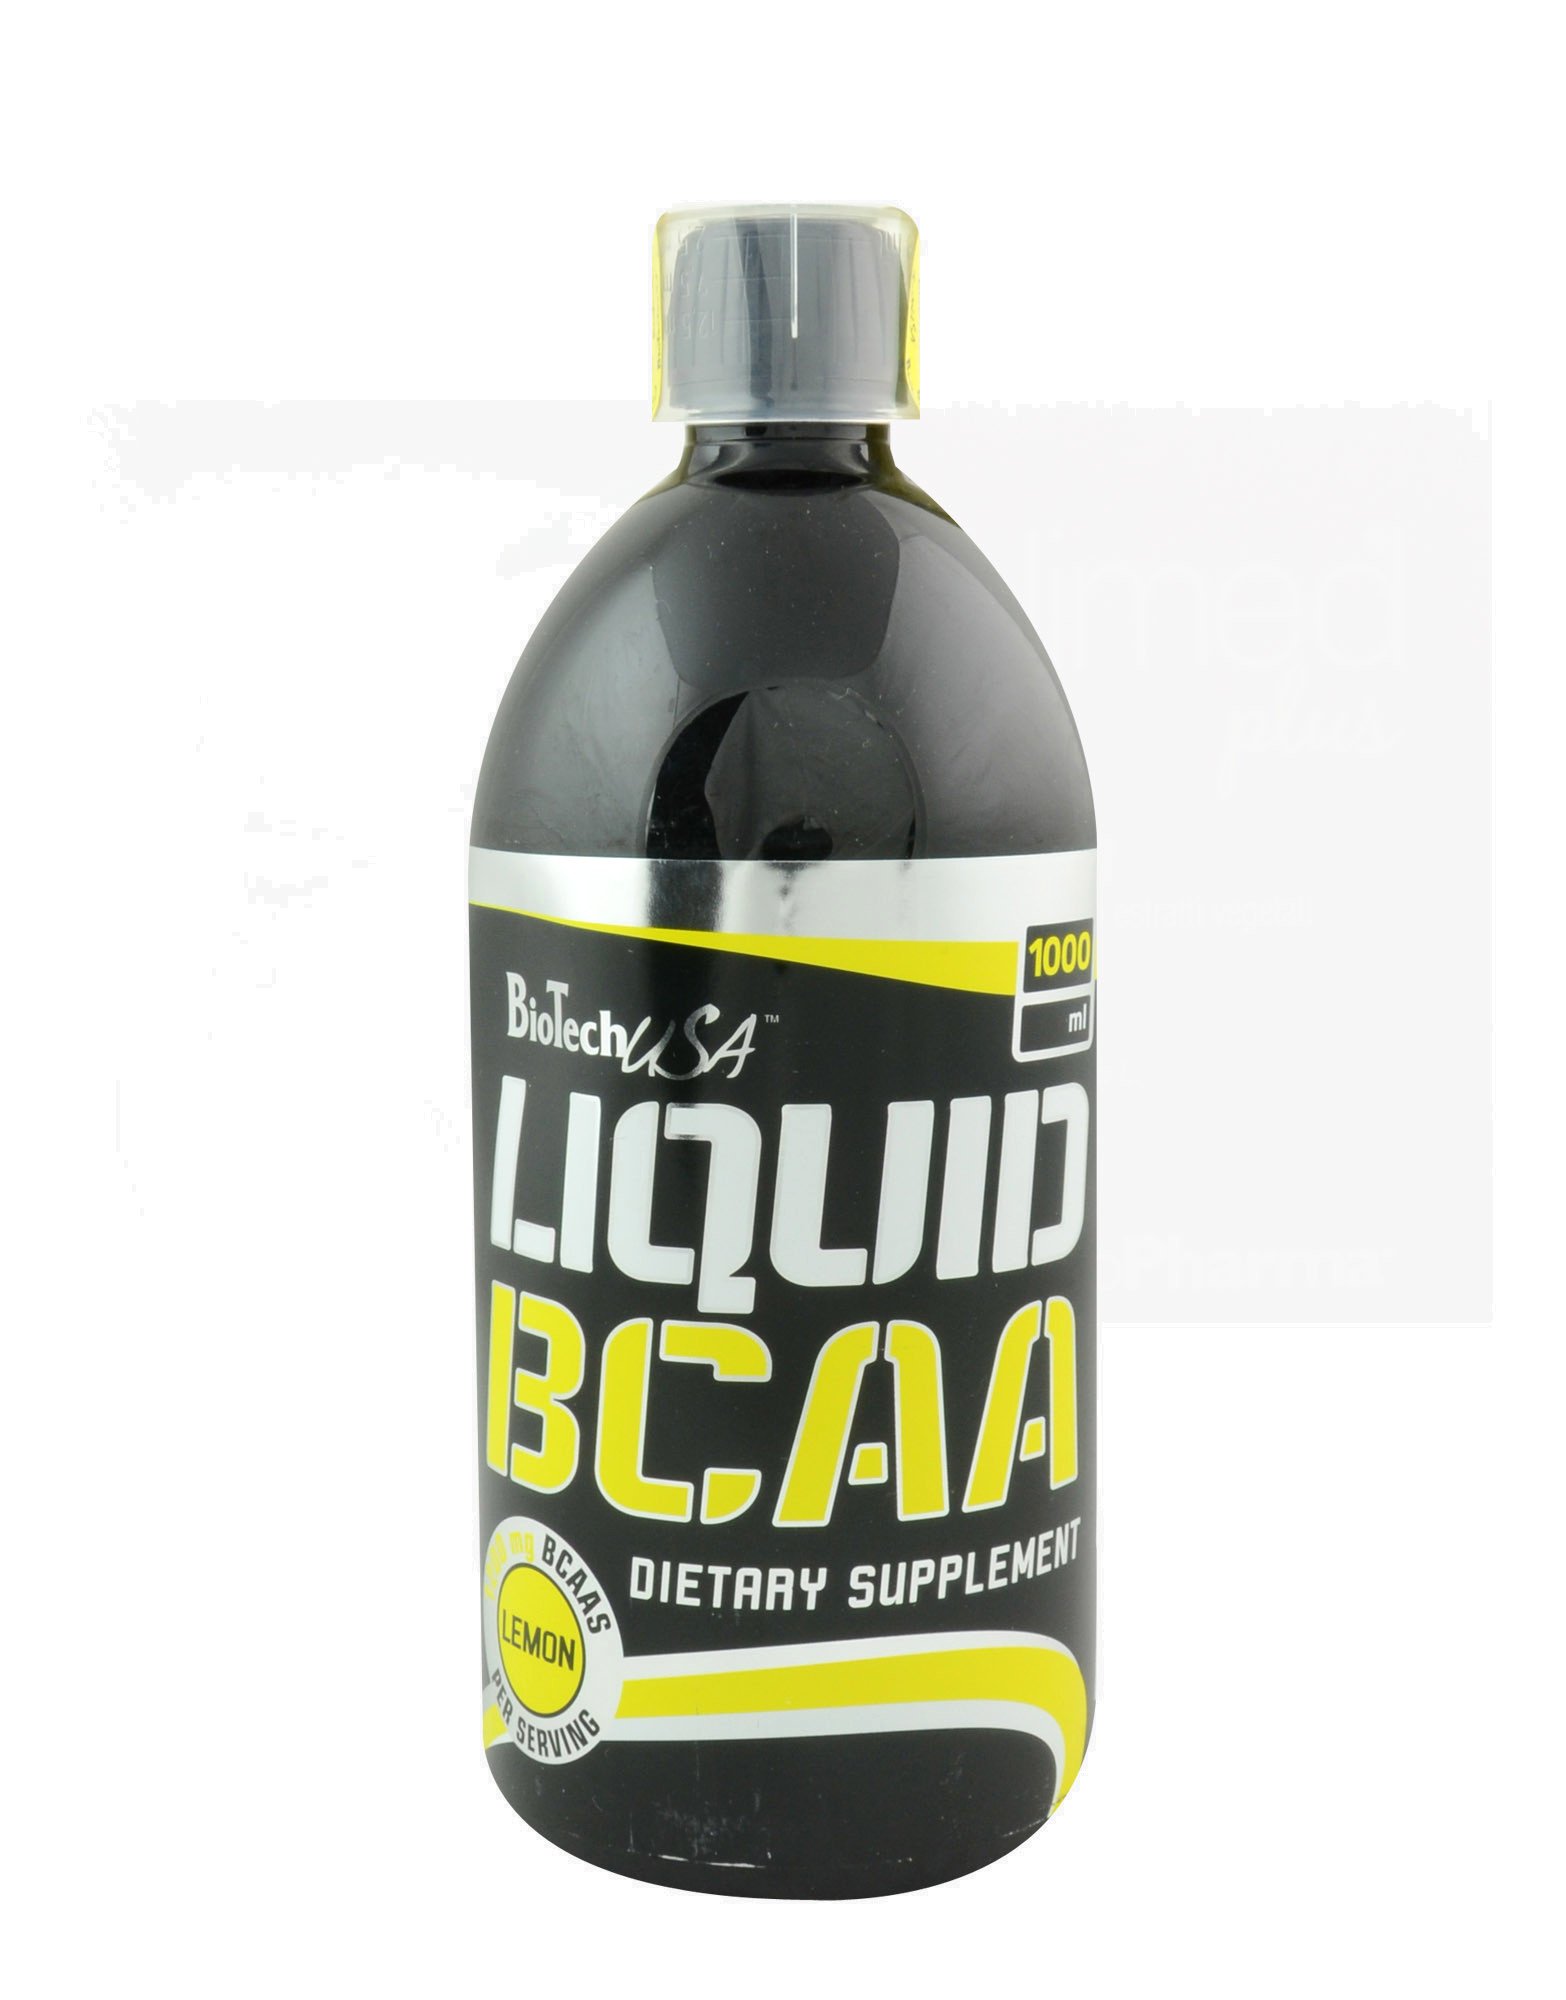 Liquid BСАА, 1000 ml, BioTech. BCAA. Weight Loss स्वास्थ्य लाभ Anti-catabolic properties Lean muscle mass 